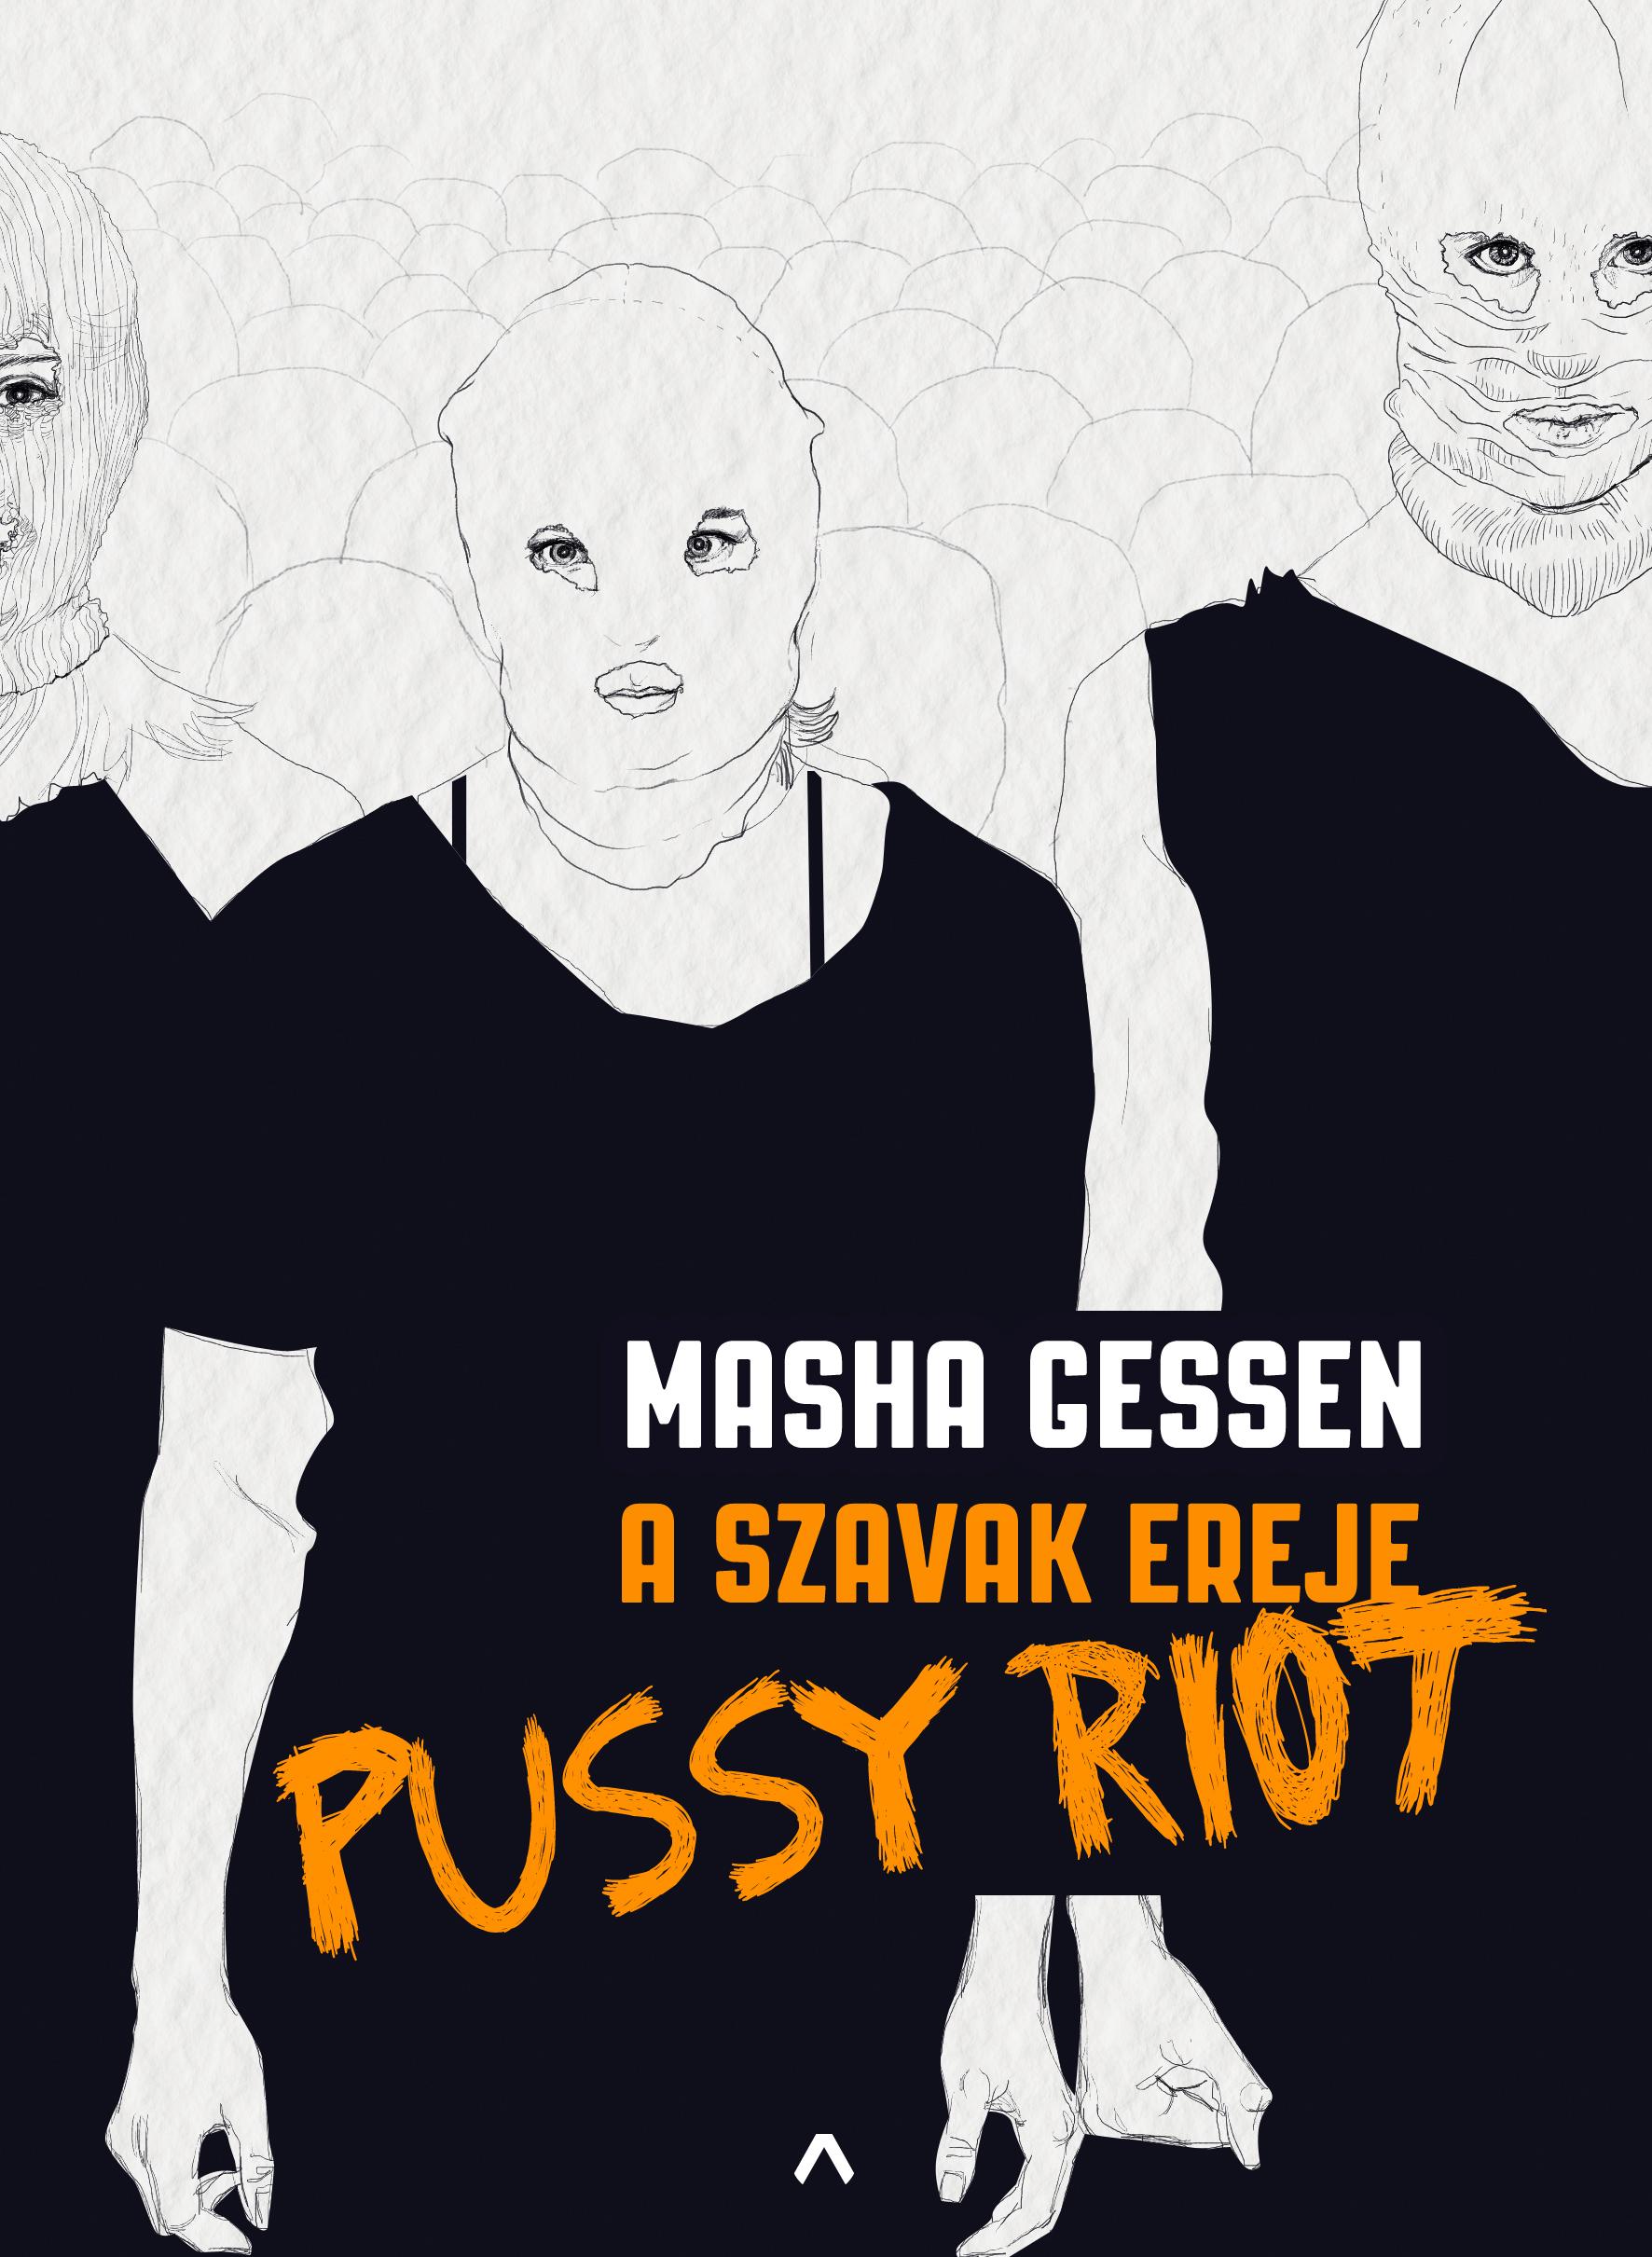 Masha Gessen - A szavak ereje - Pussy Riot [outlet]